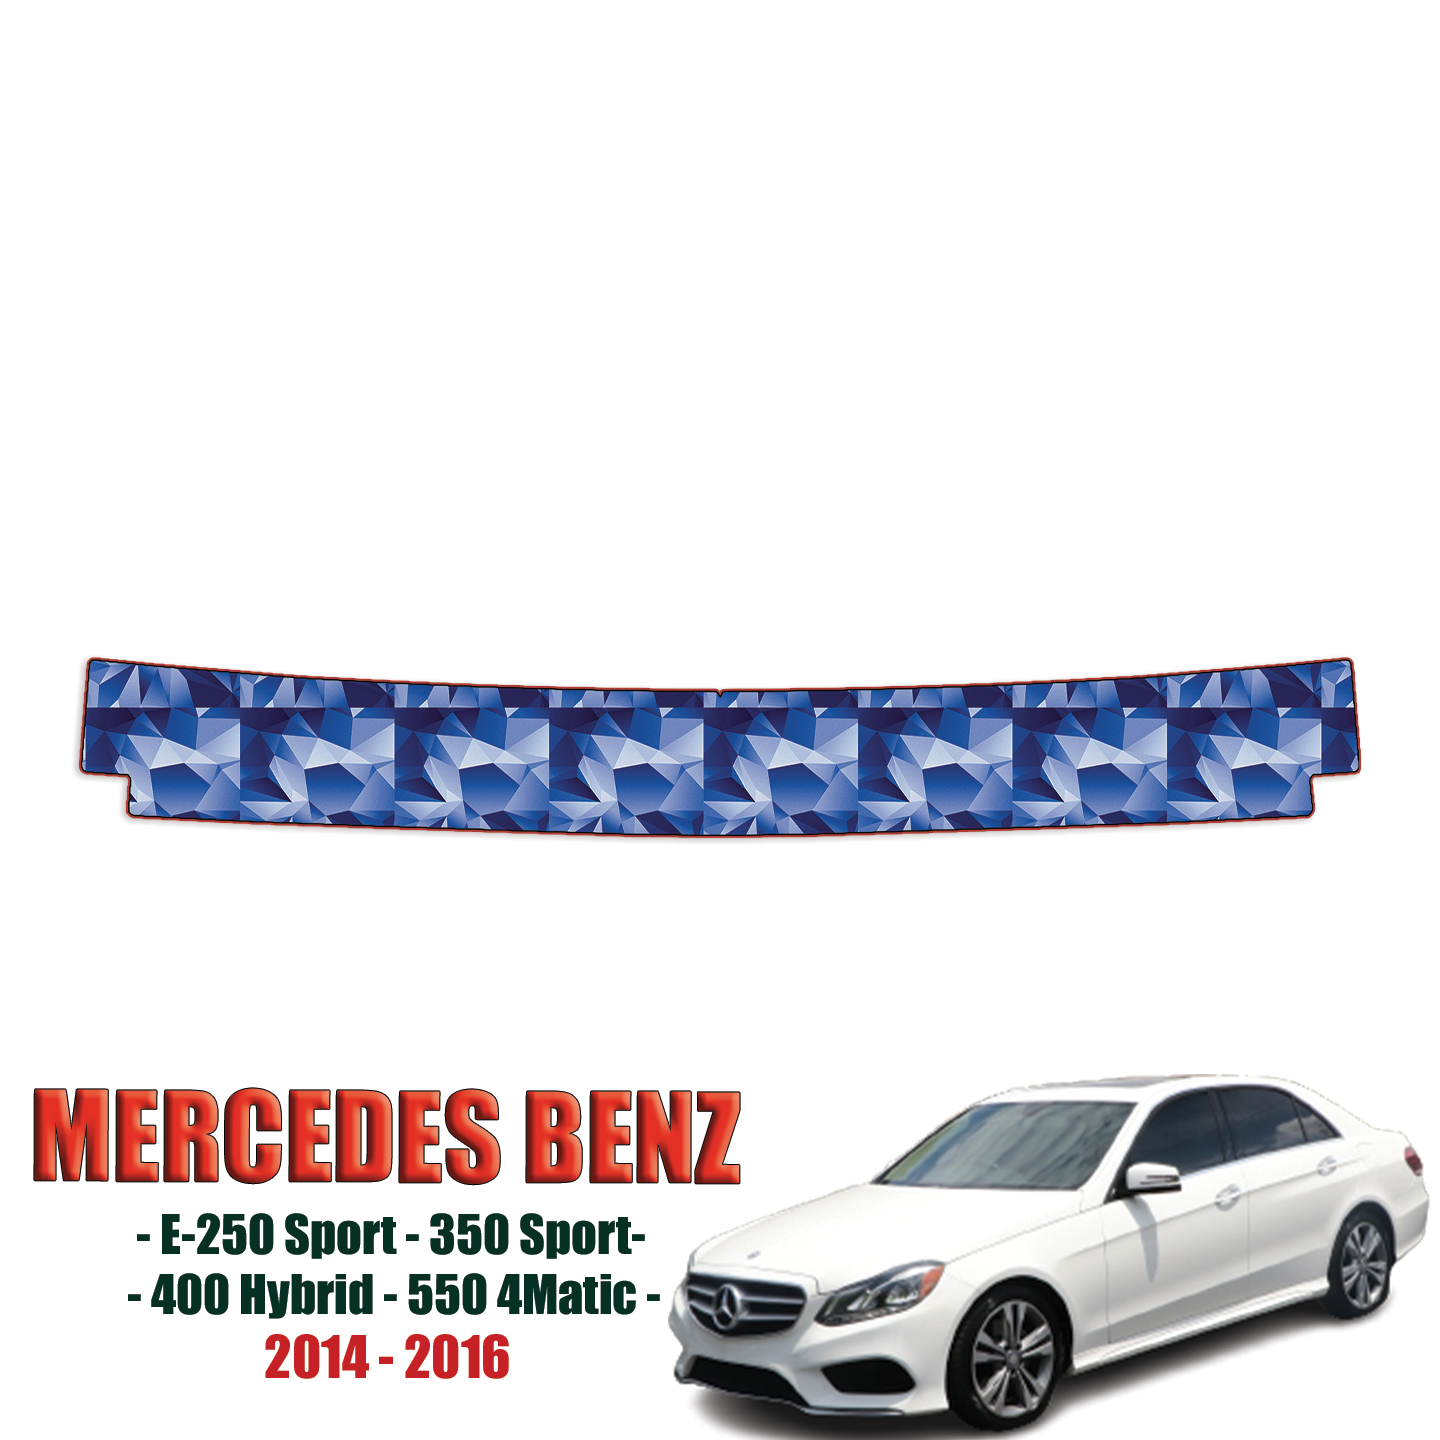 2014-2016 Mercedes Benz  E-250 Sport, E-350 Sport, 400 Hybrid, 550 4matic Precut Paint Protection Kit – Bumper Step